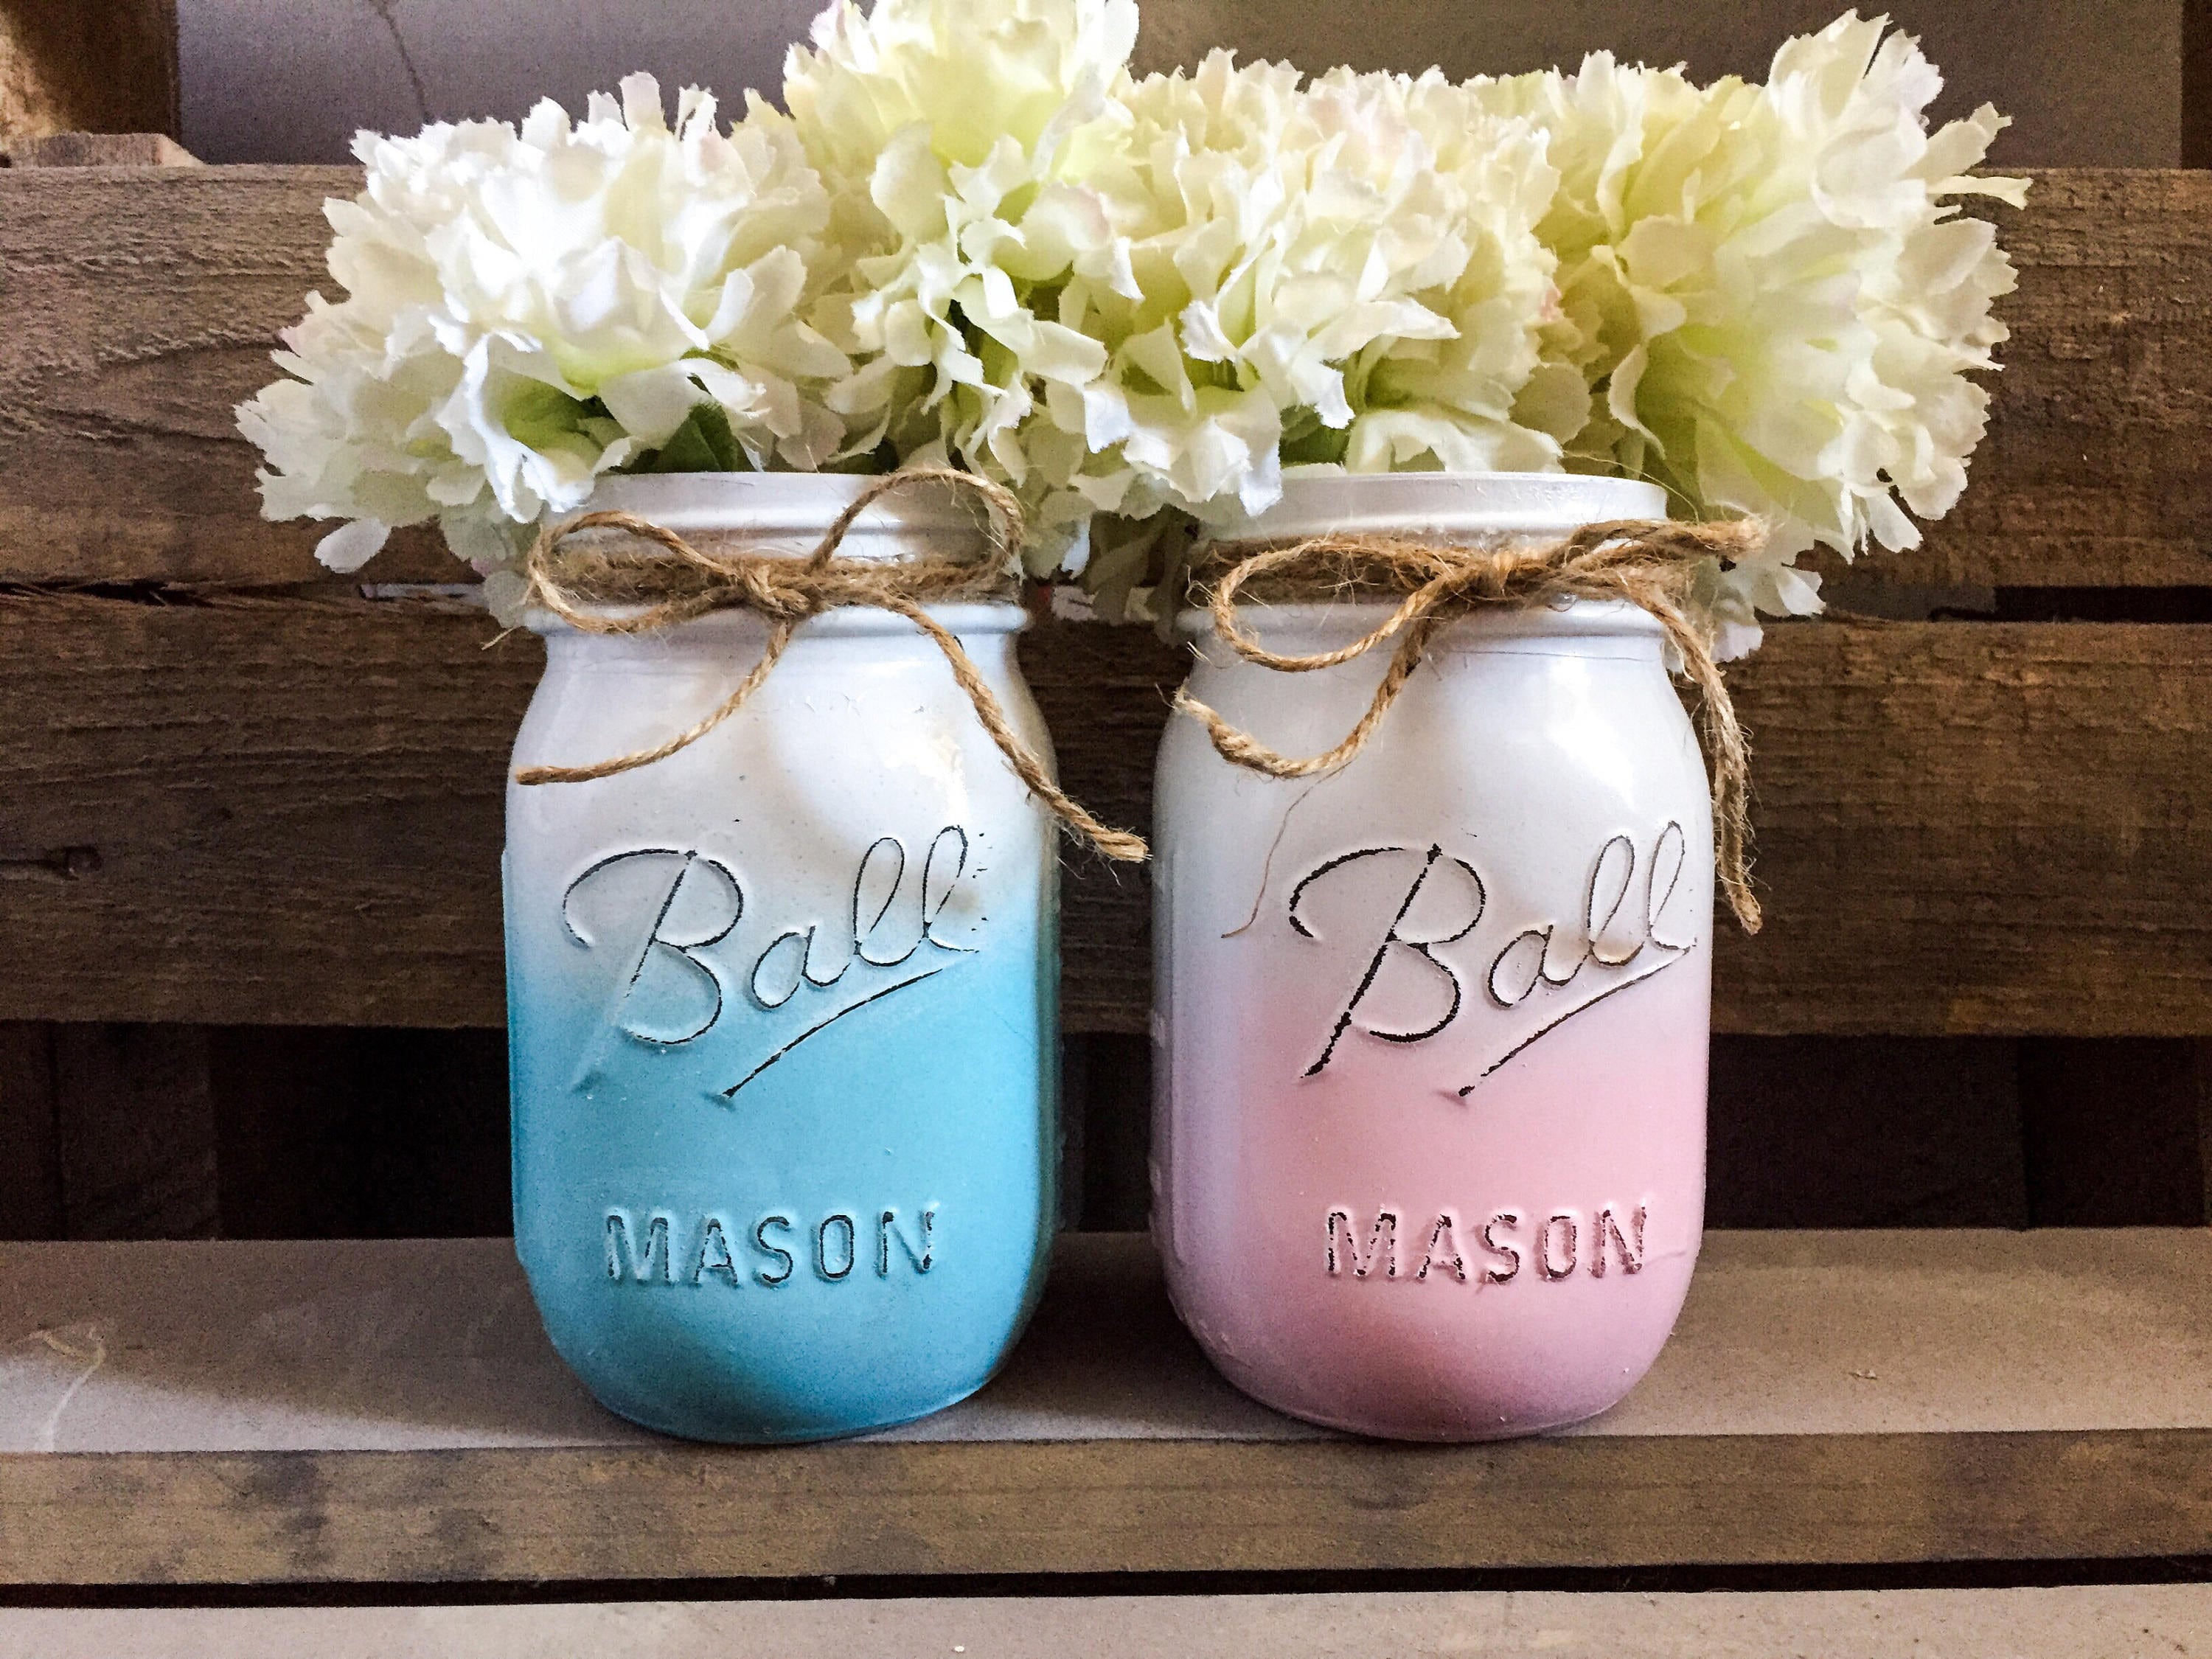 Variety of Sizes Available 16 Oz. Mason Jars, Painted Mason Jars Bulk Mason  Jars Distressed Mason Jars, Mason Jar Vase, Rustic Mason Jars -  Denmark